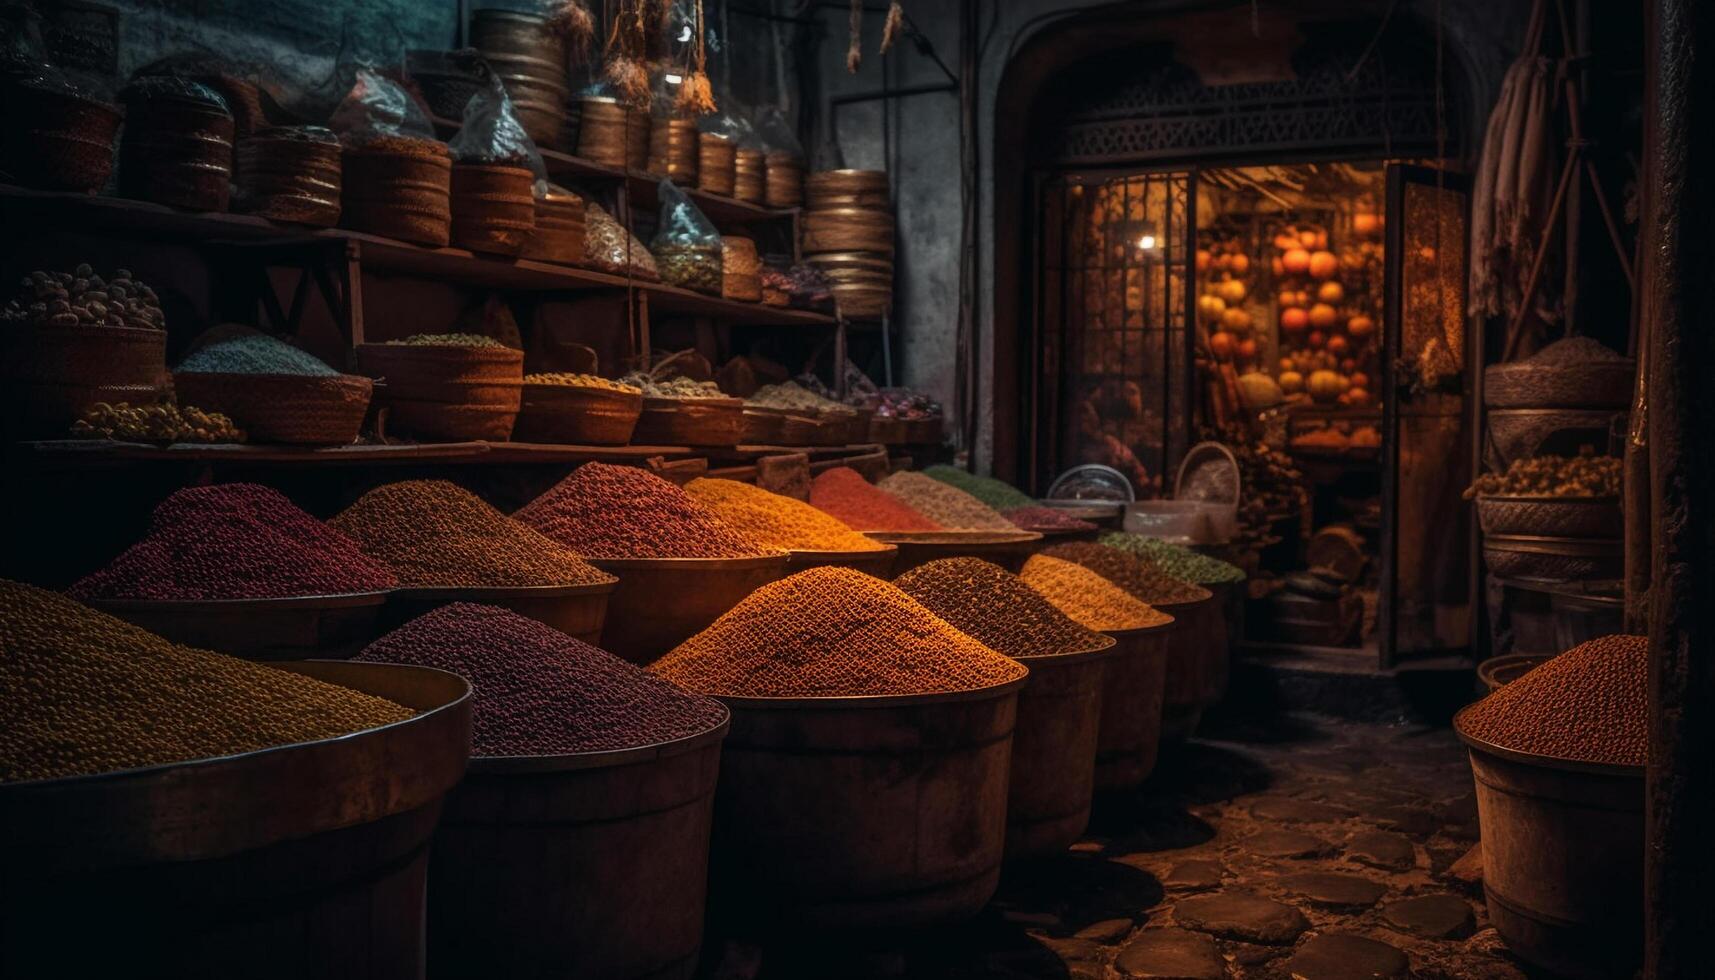 Colorful pottery jar sells fiery chili seasoning generated by AI photo